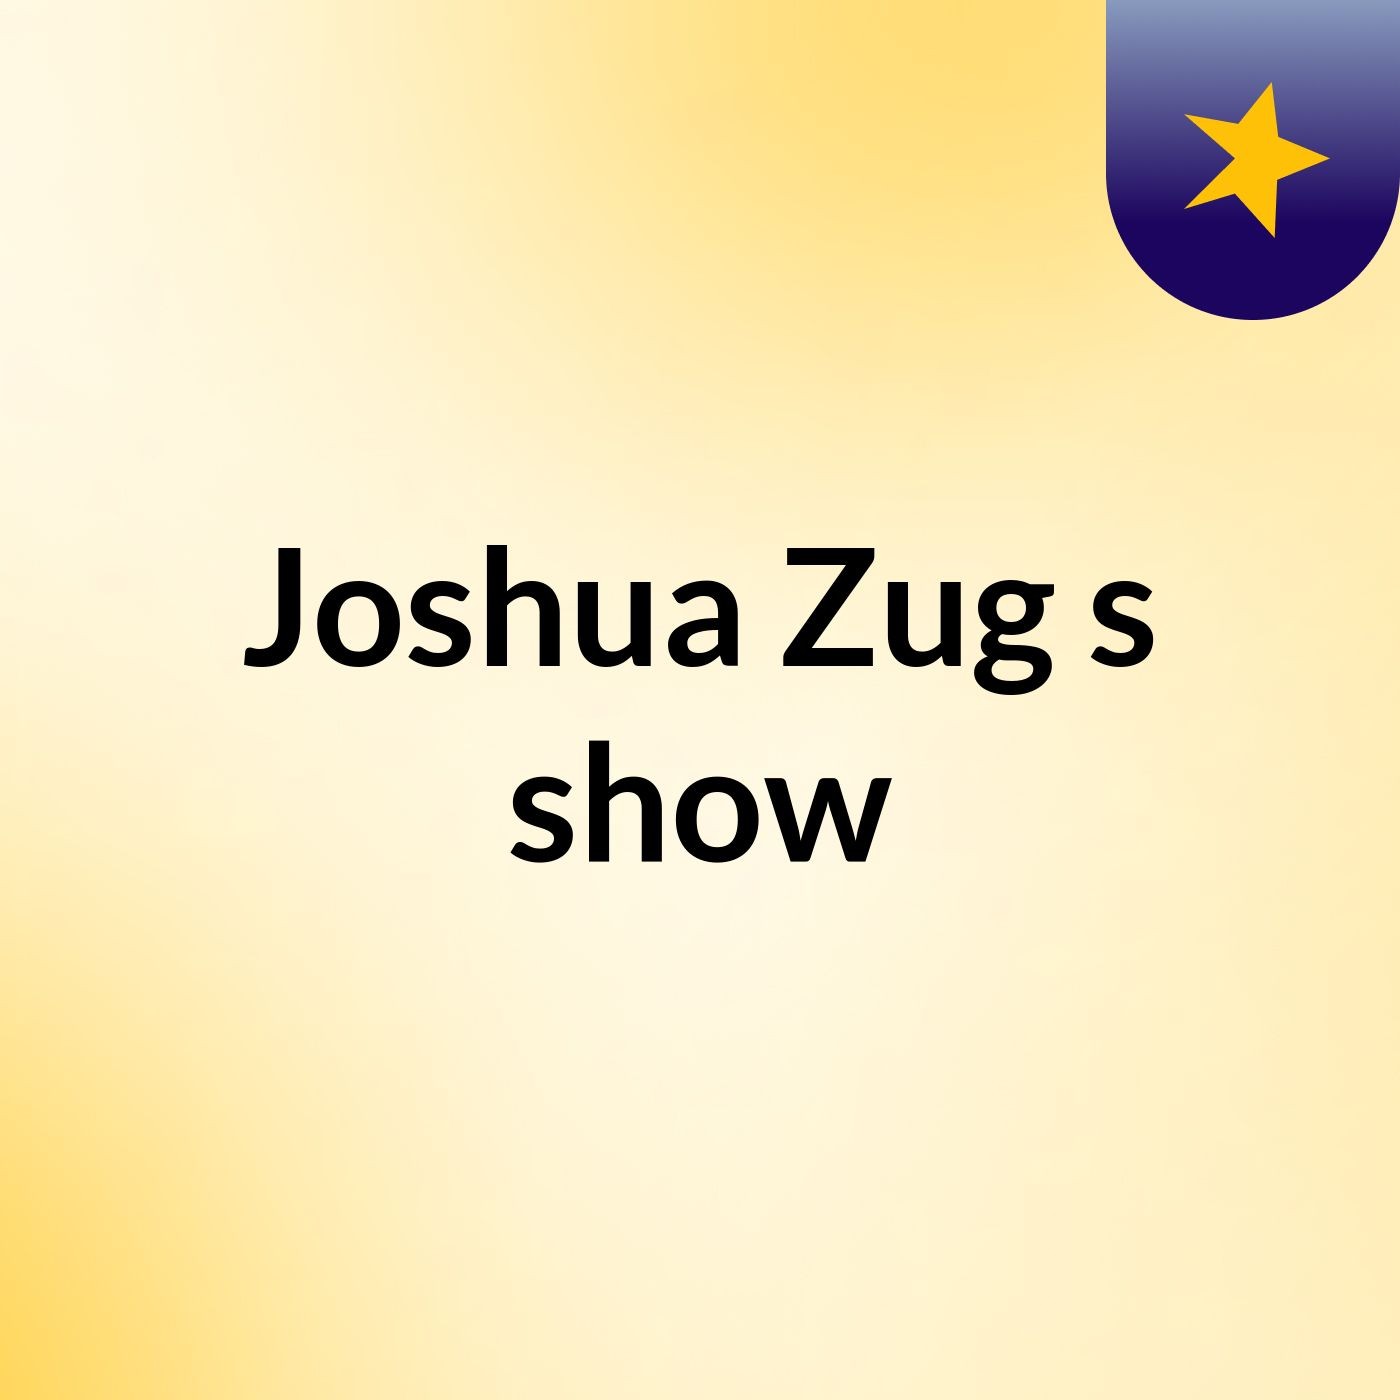 Joshua Zug's show